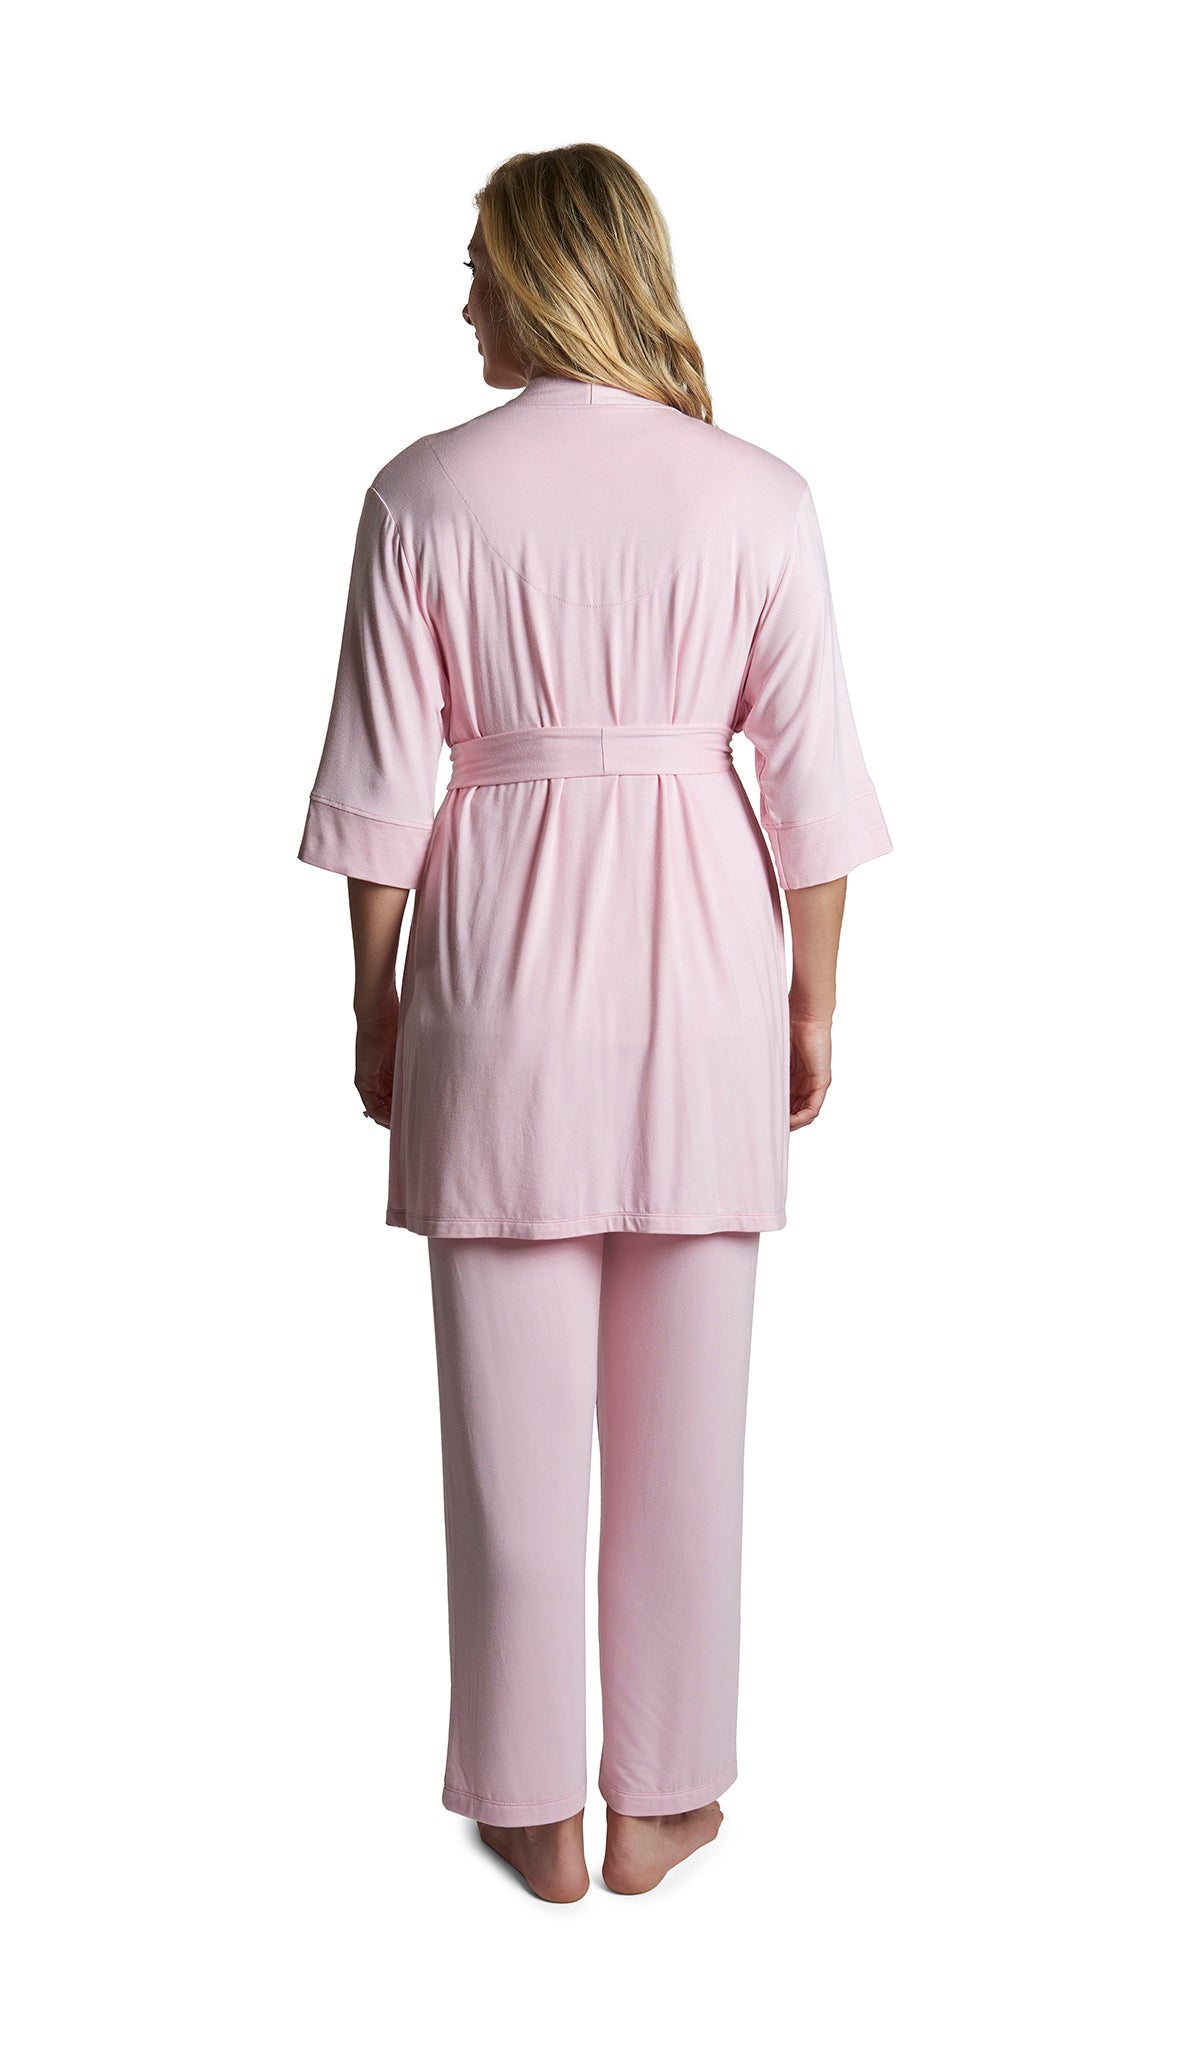 Blush Analise 3-Piece Set, back shot of woman wearing robe and pant.